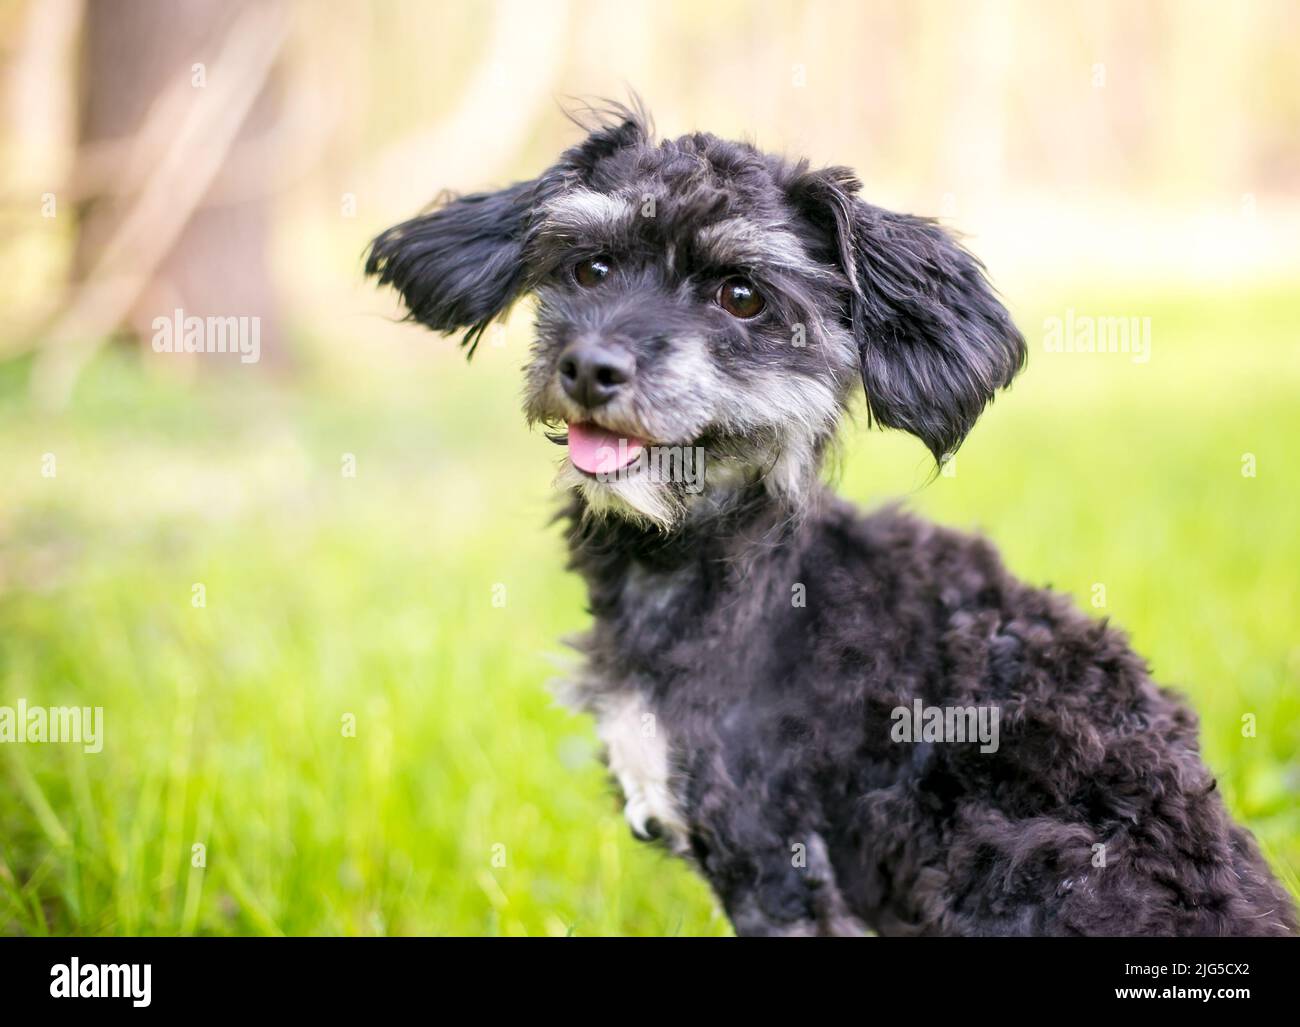 A cute Shih Tzu x Cocker Spaniel mixed breed dog sitting outdoors Stock Photo